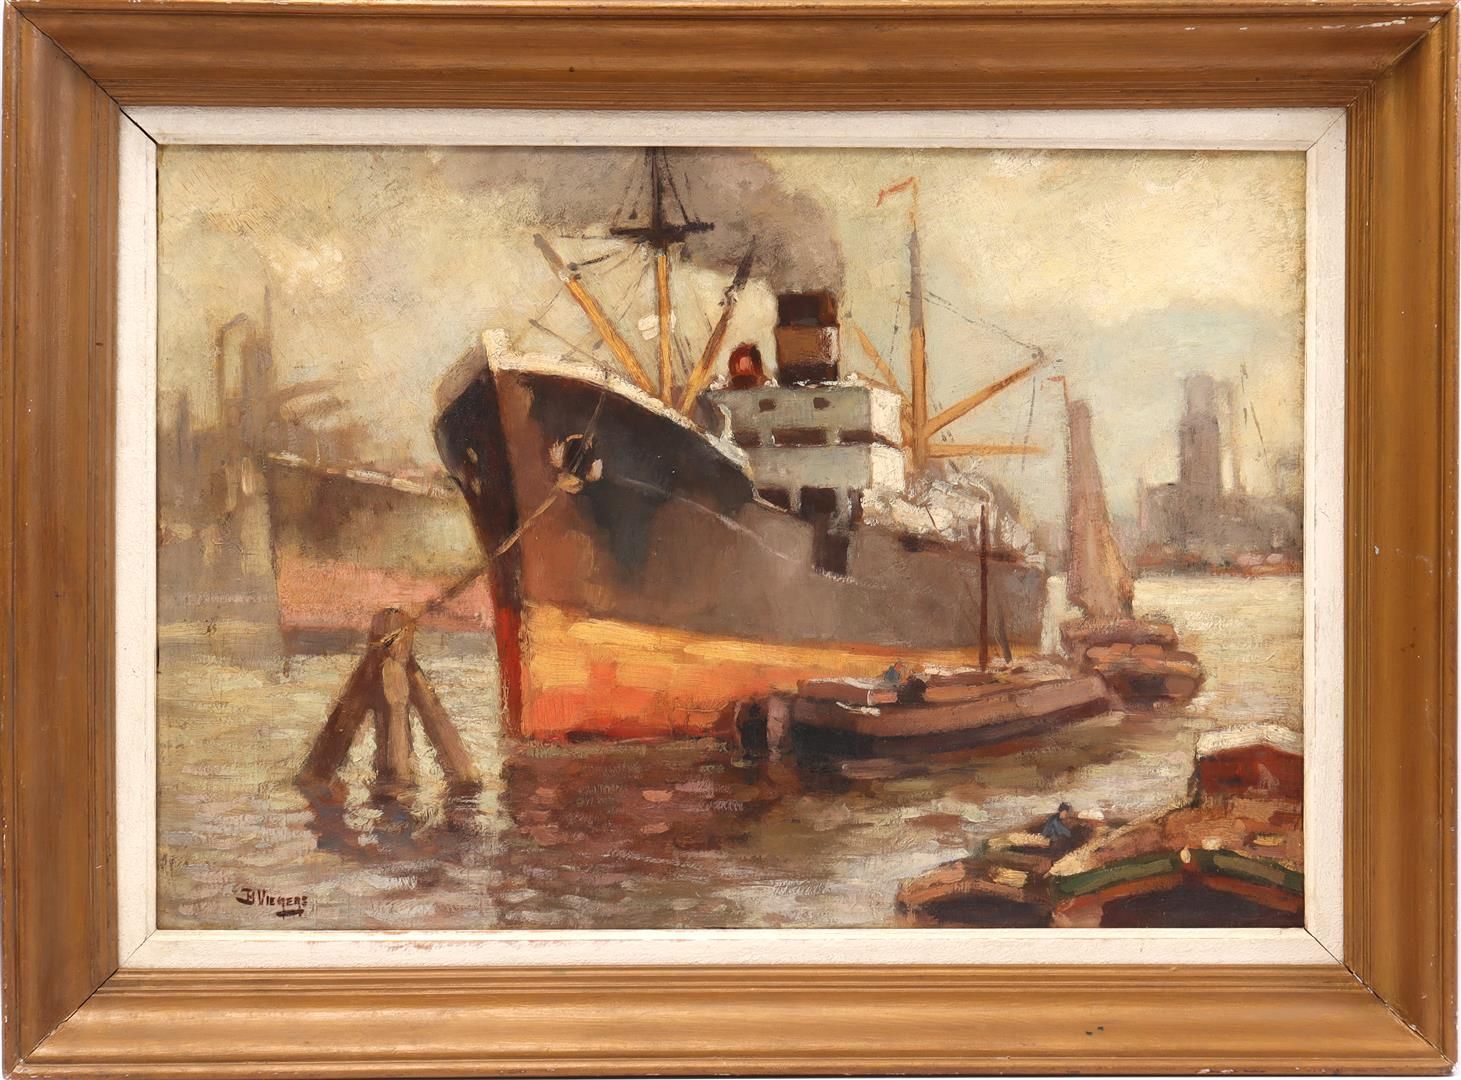 Ben Viegers Ben Viegers (1886-1947)

Navi nel porto, pannello 51x74 cm